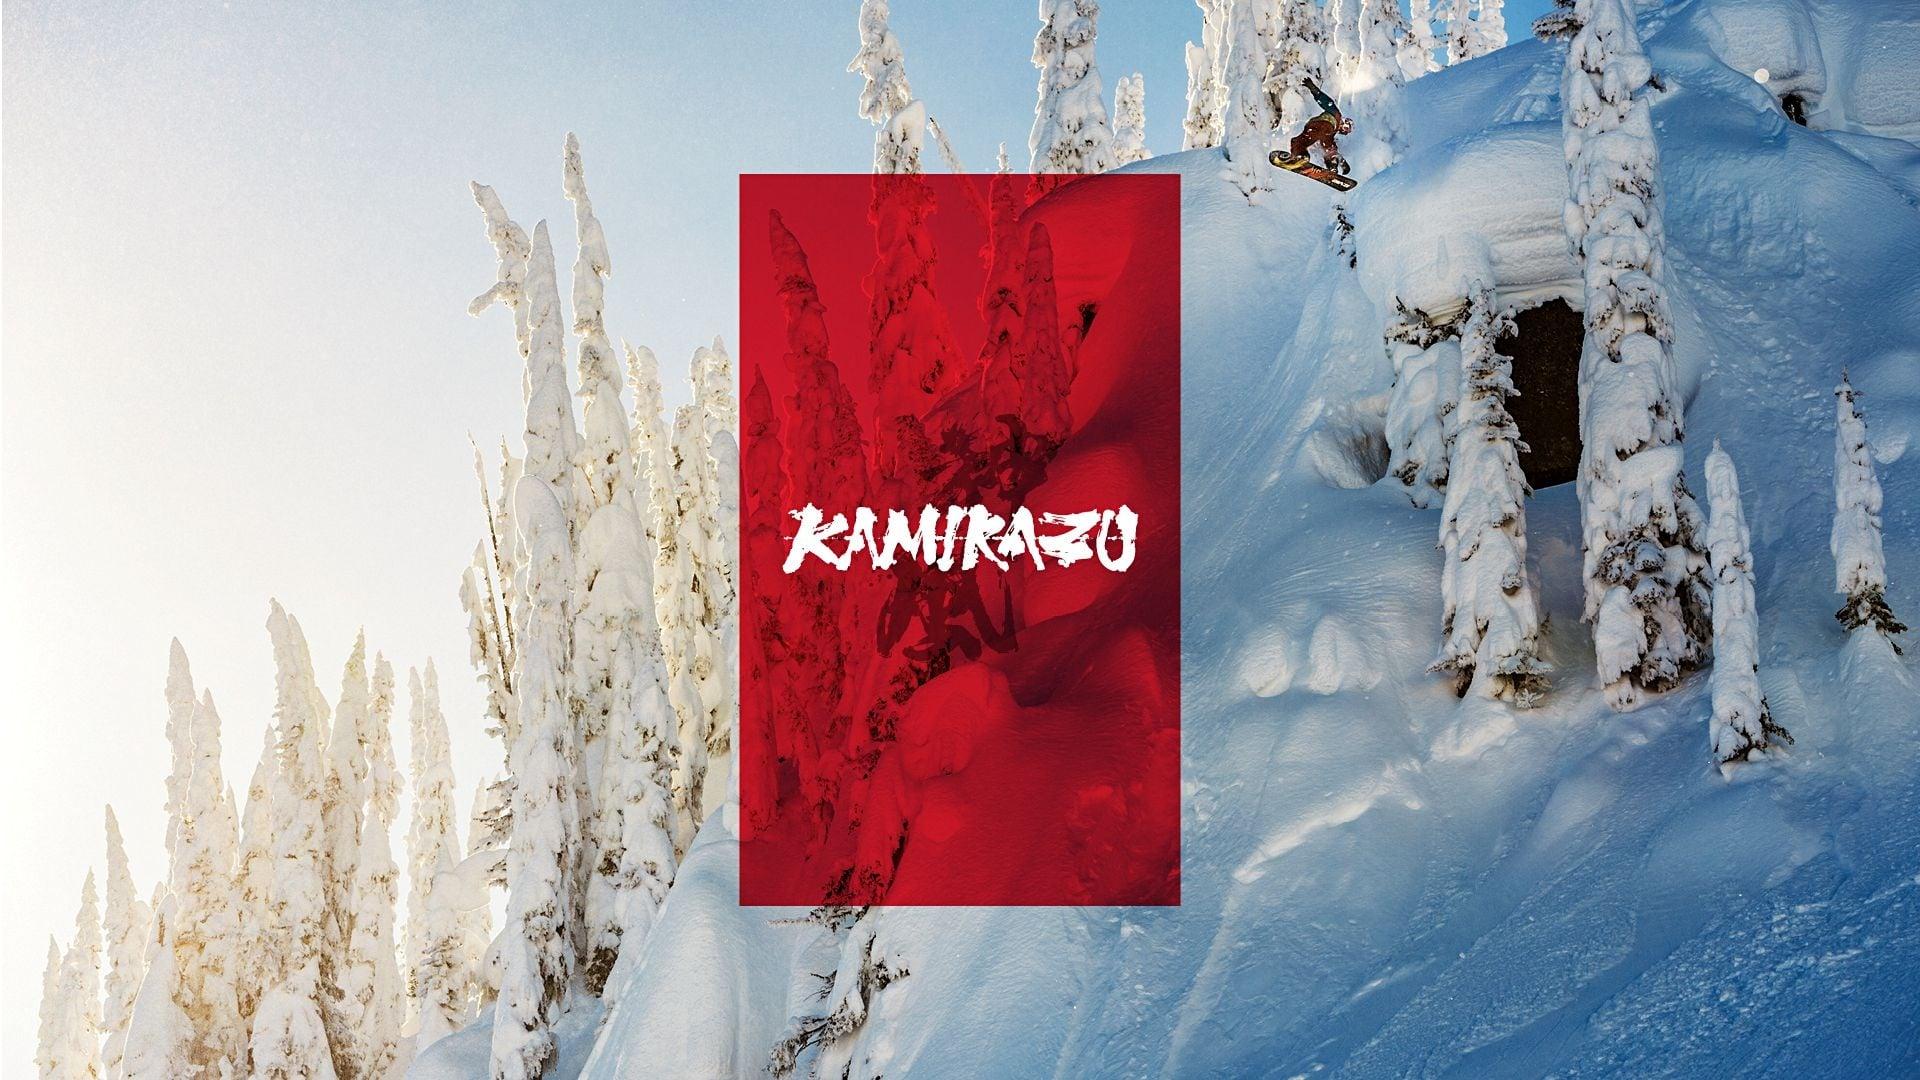 Kamikazu: A TransWorld SNOWboarding Production backdrop